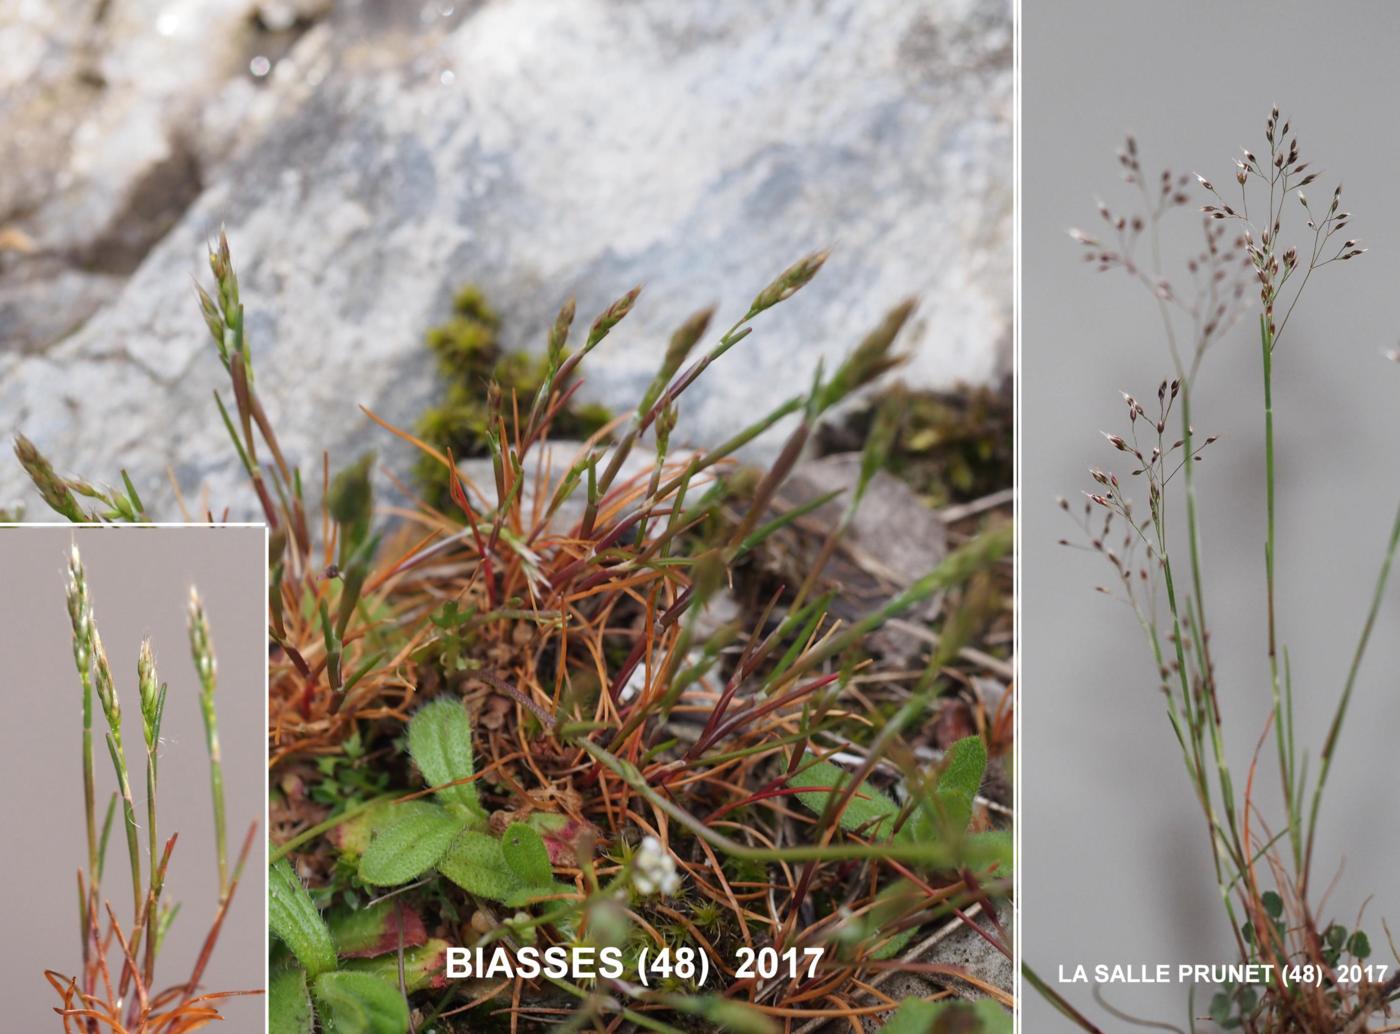 Hair-grass, Silvery plant